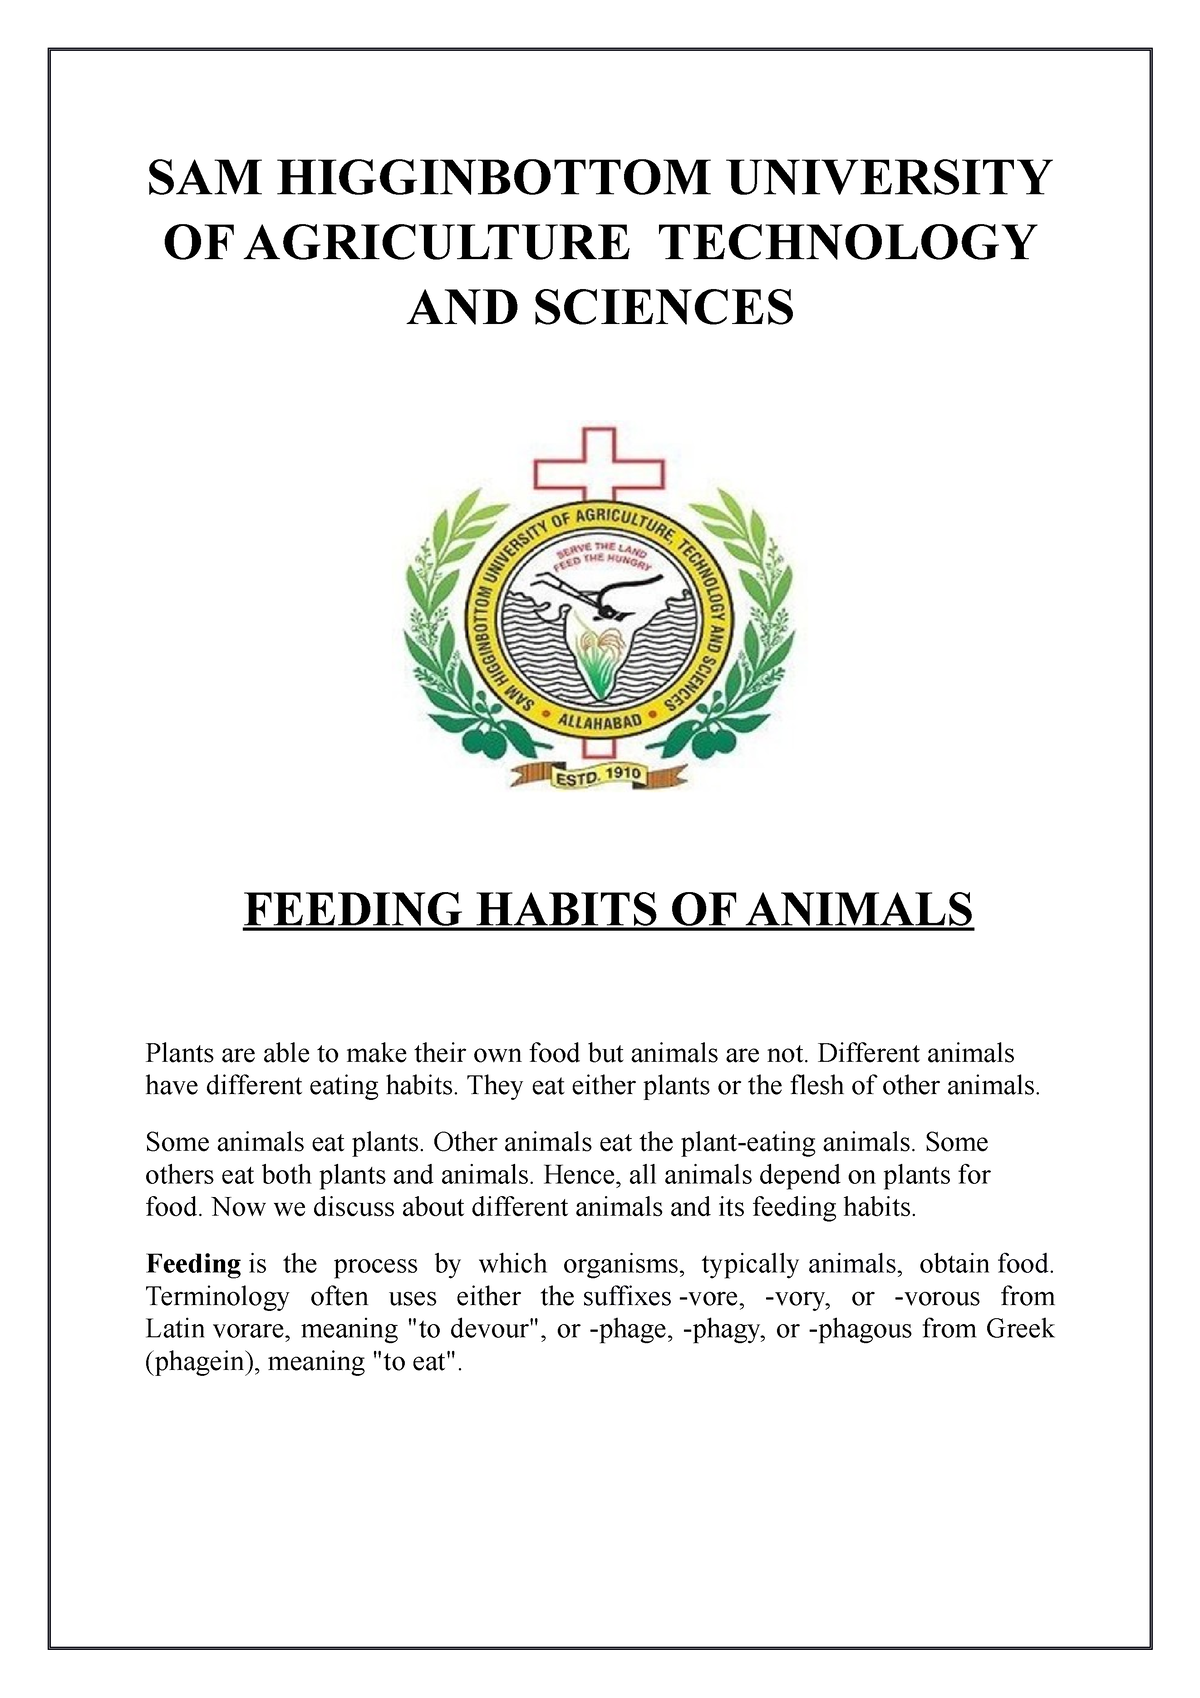 Feeding Habits of Animals 1 - SAM HIGGINBOTTOM UNIVERSITY OF AGRICULTURE  TECHNOLOGY AND SCIENCES - Studocu